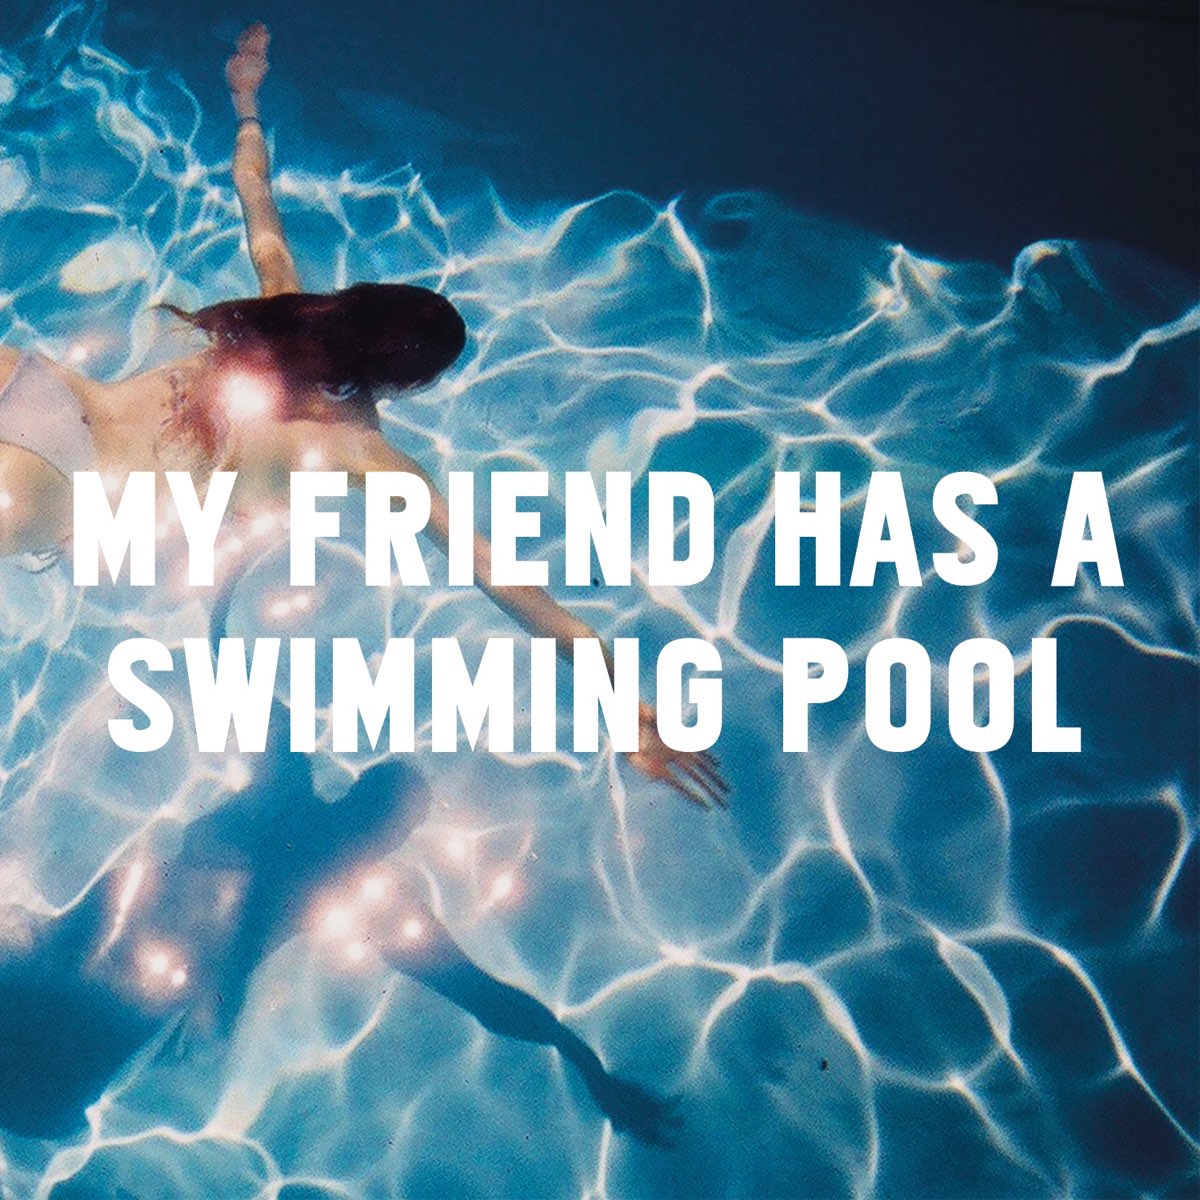 Свиминг пул песня. Swimming Pool Song. My friend has a swimming Pool трек. Swimming Pool альбом. Swimming Pool обложка песни.